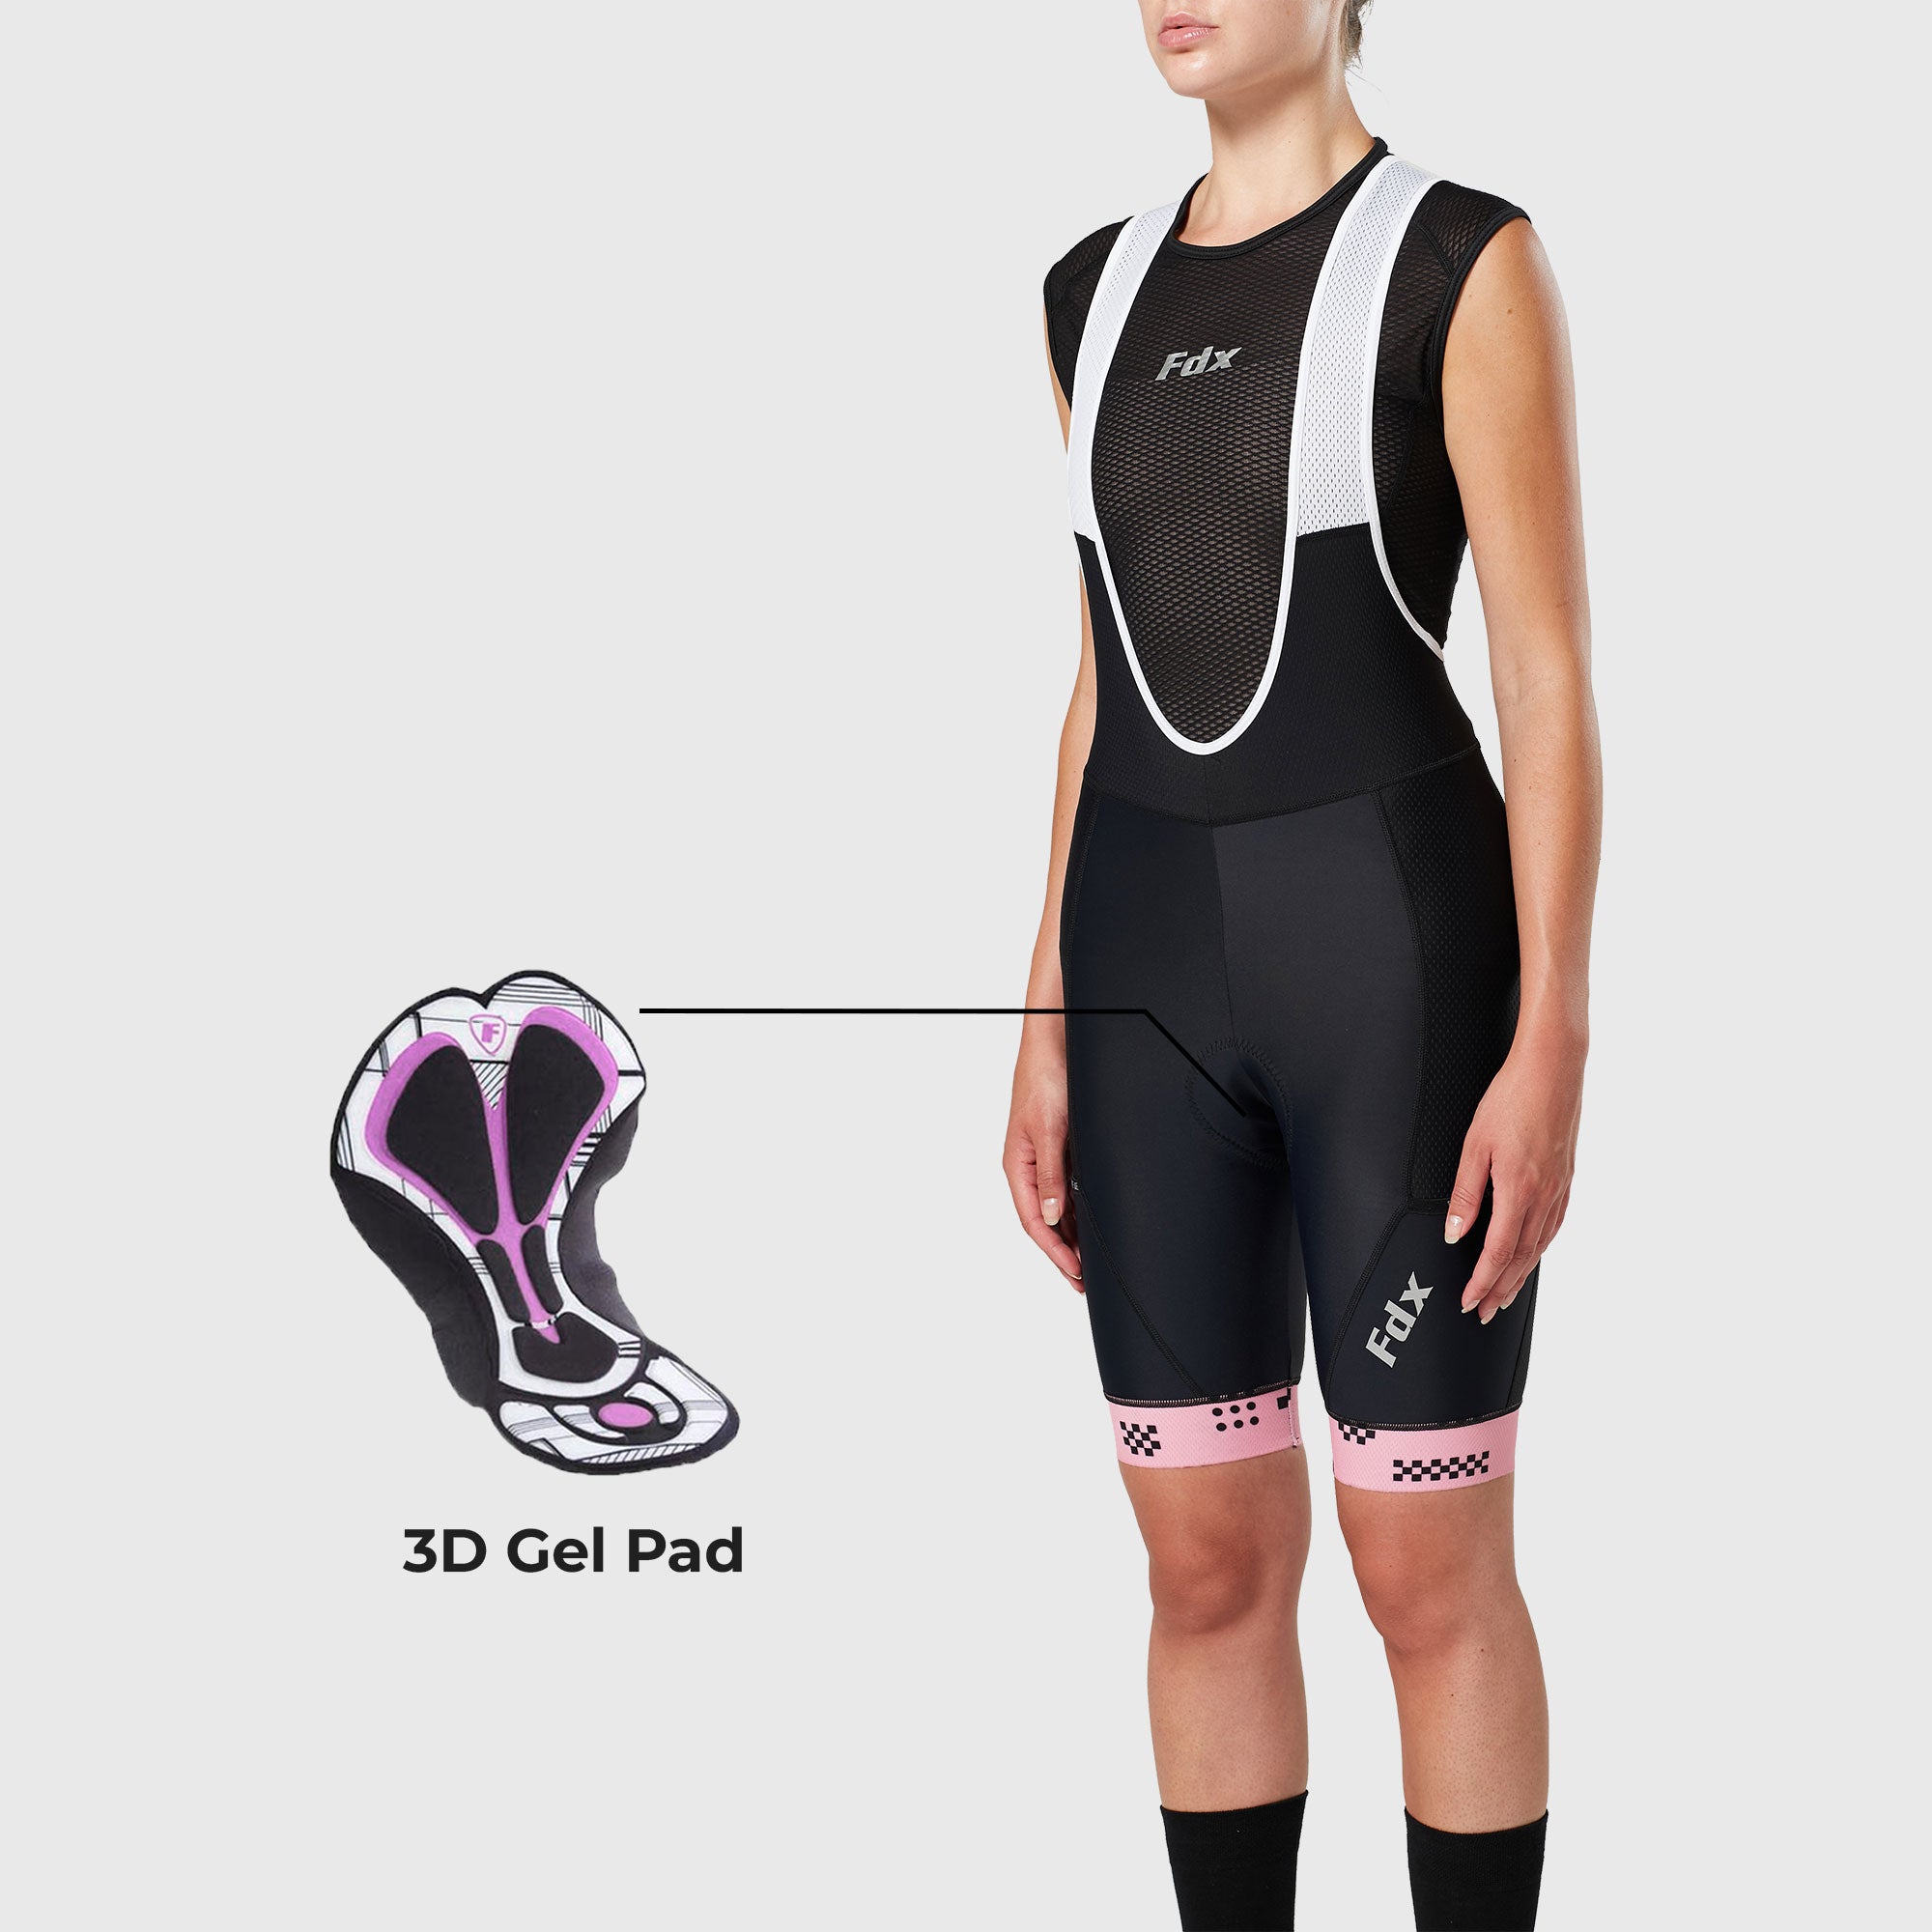 Fdx Women's Tea Pink Gel Padded Cycling Bib Shorts For Summer Best Breathable Outdoor Road Bike Short Length Bib - All Day